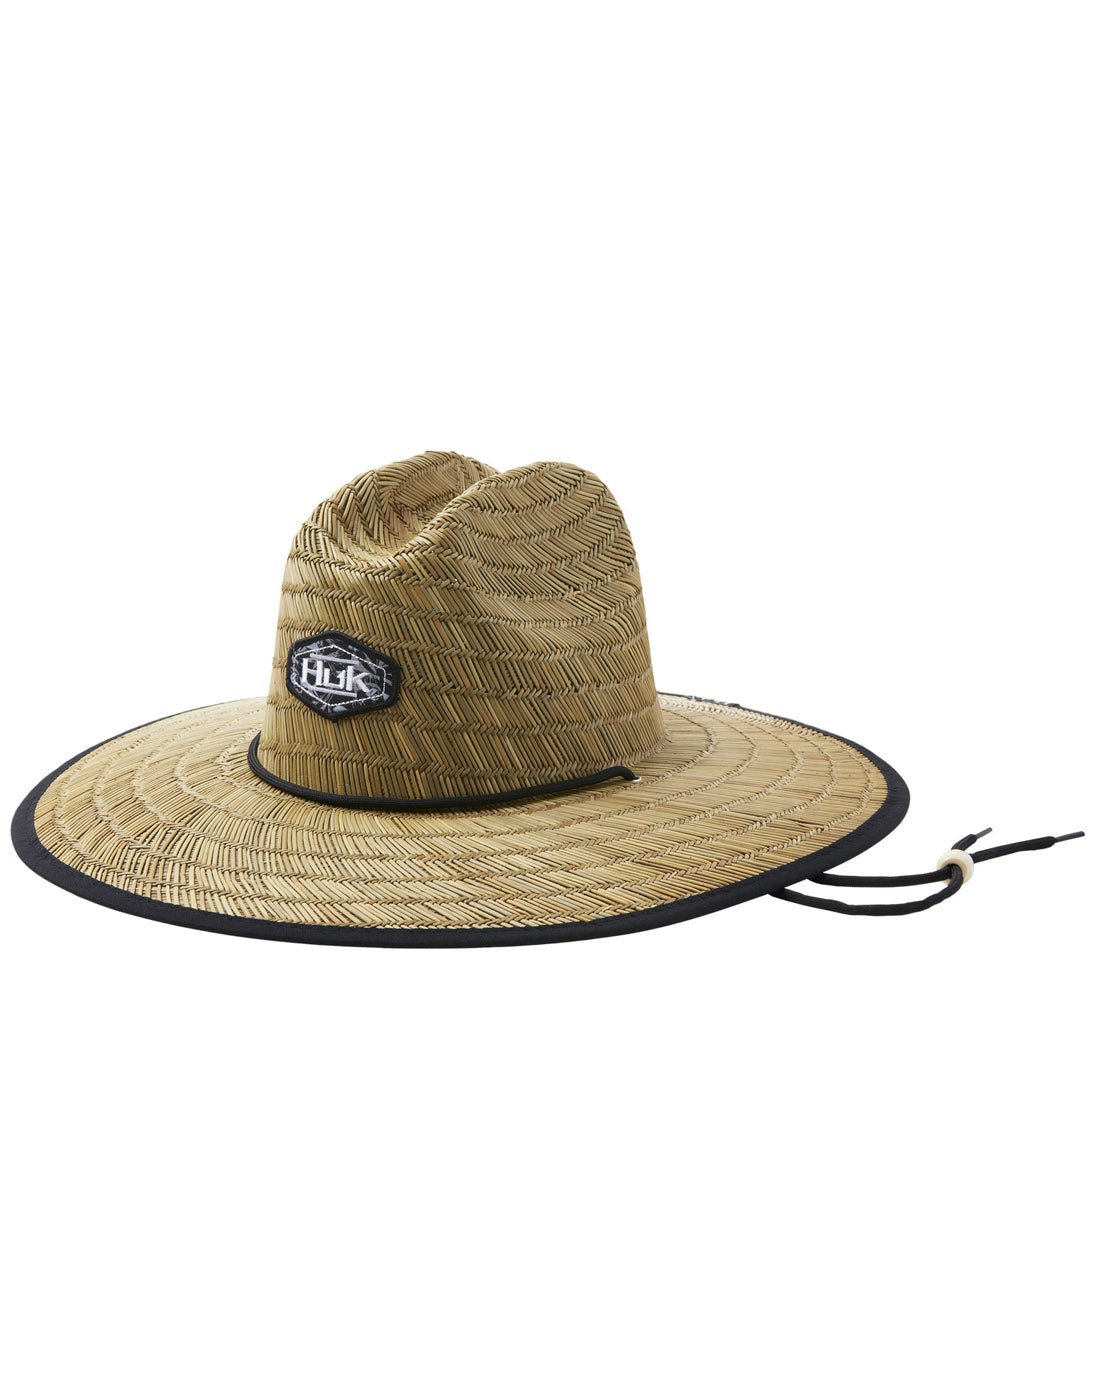 HUK Ocean Palm Men's Fishing Straw Hat Multi (Size: One Size)